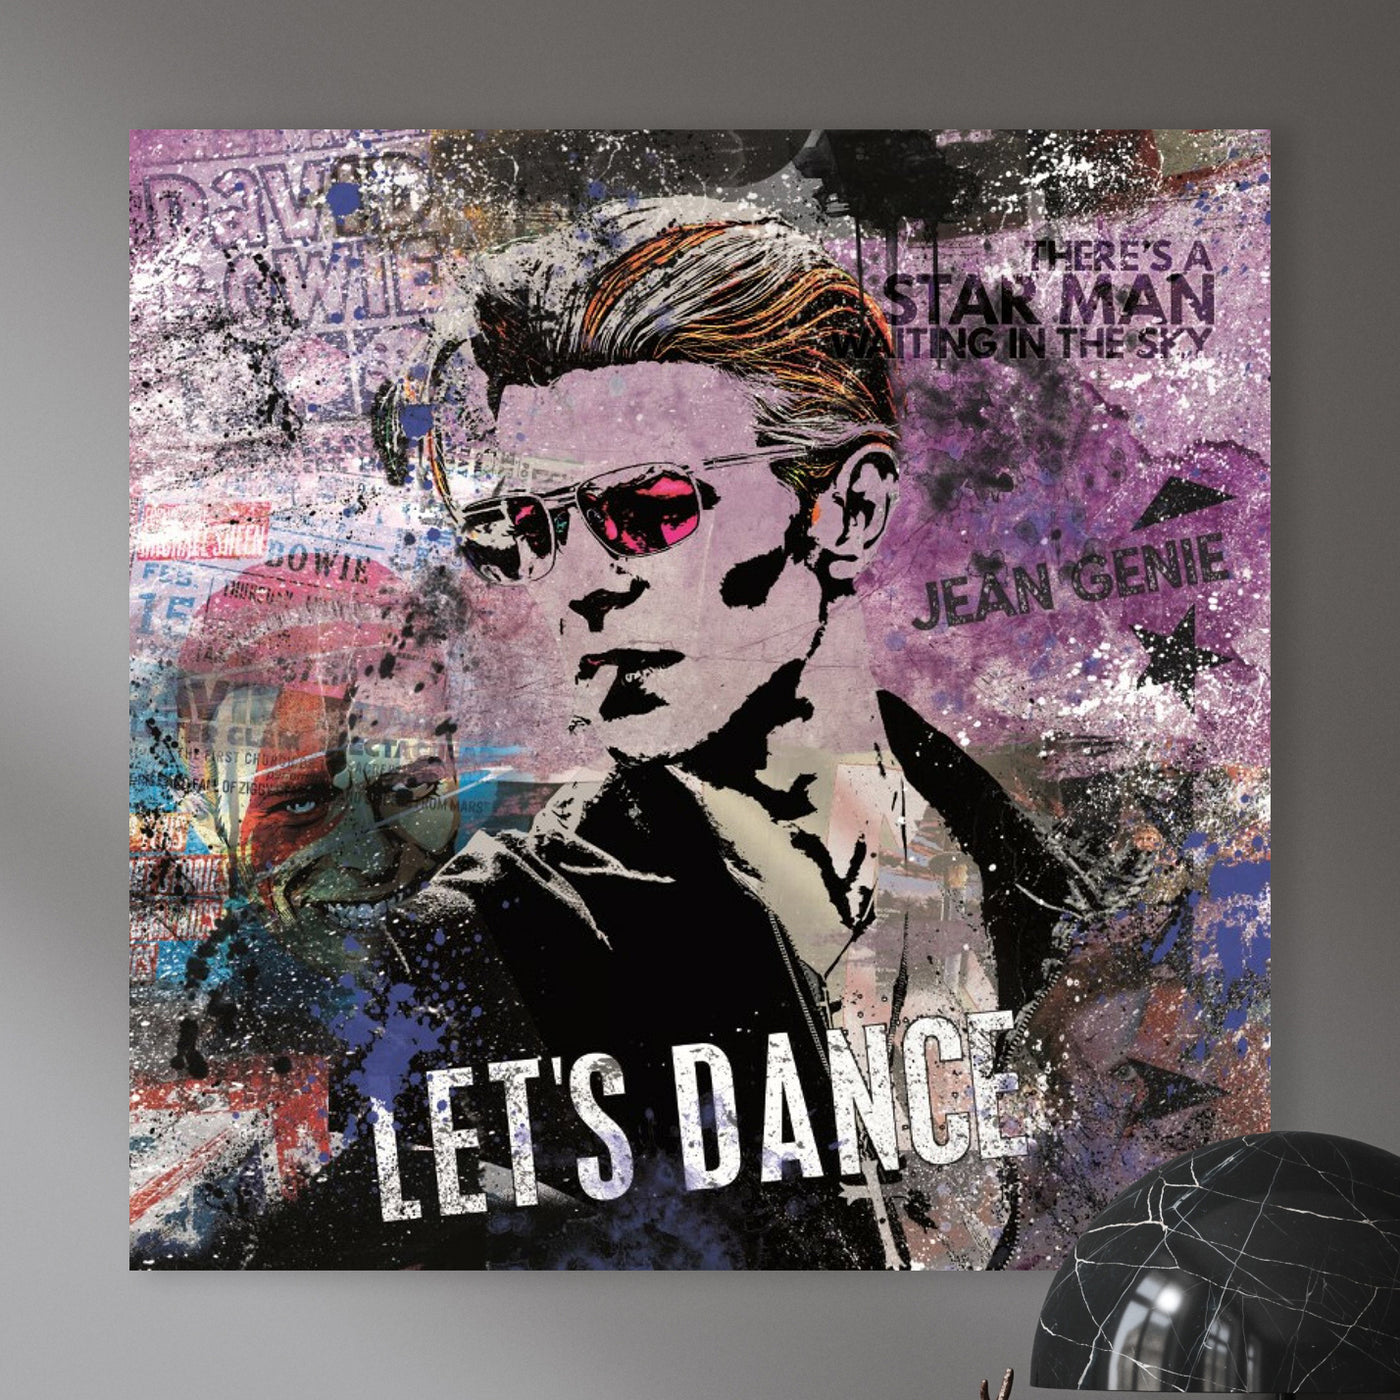 Bowie let's dance -  Rene Ladenius